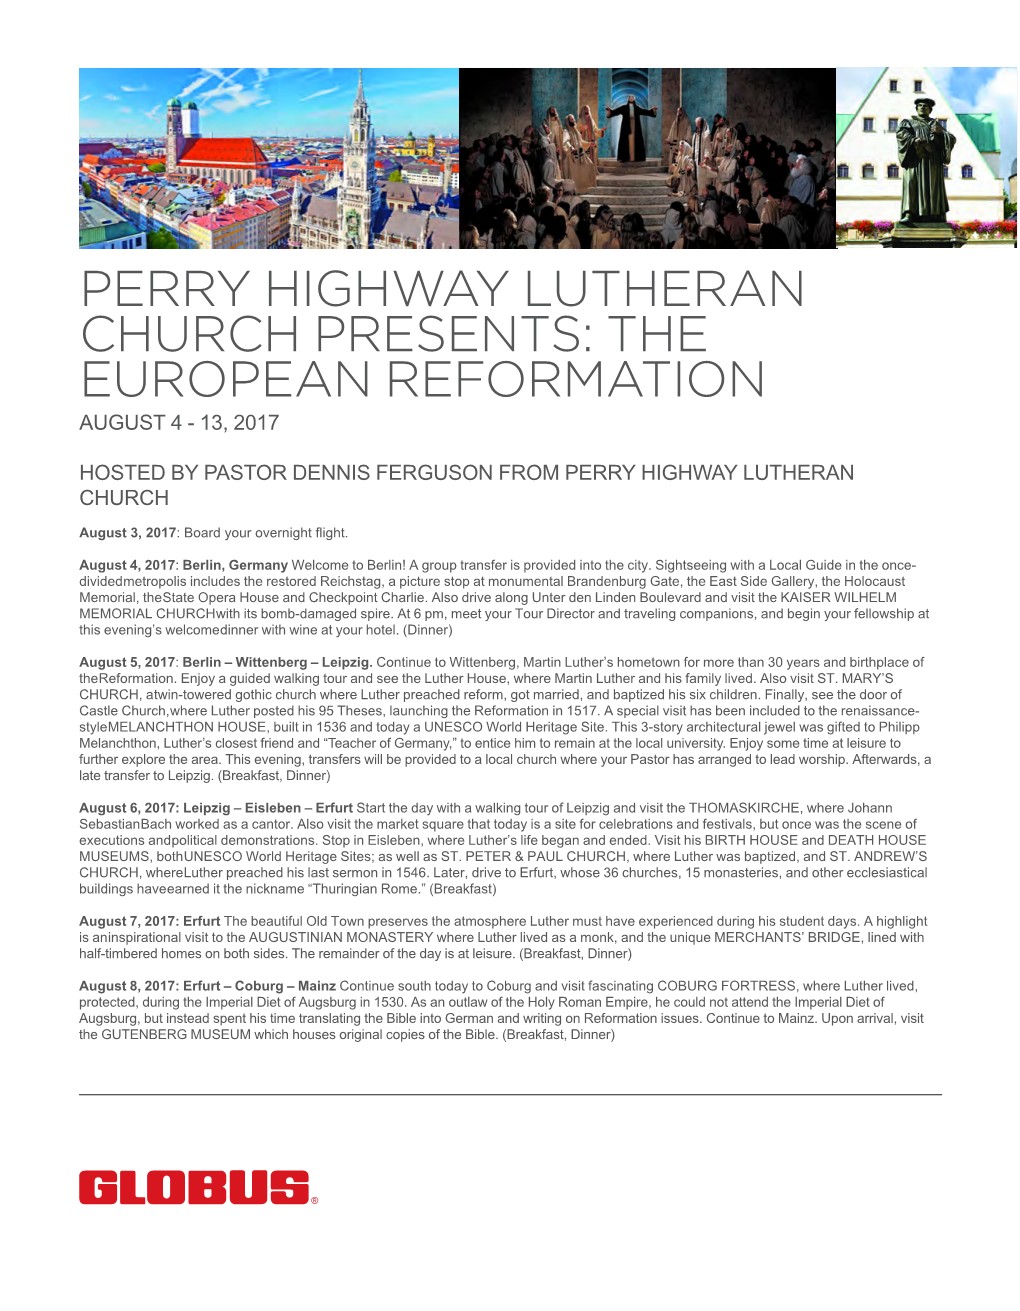 The European Reformation August 4 - 13, 2017